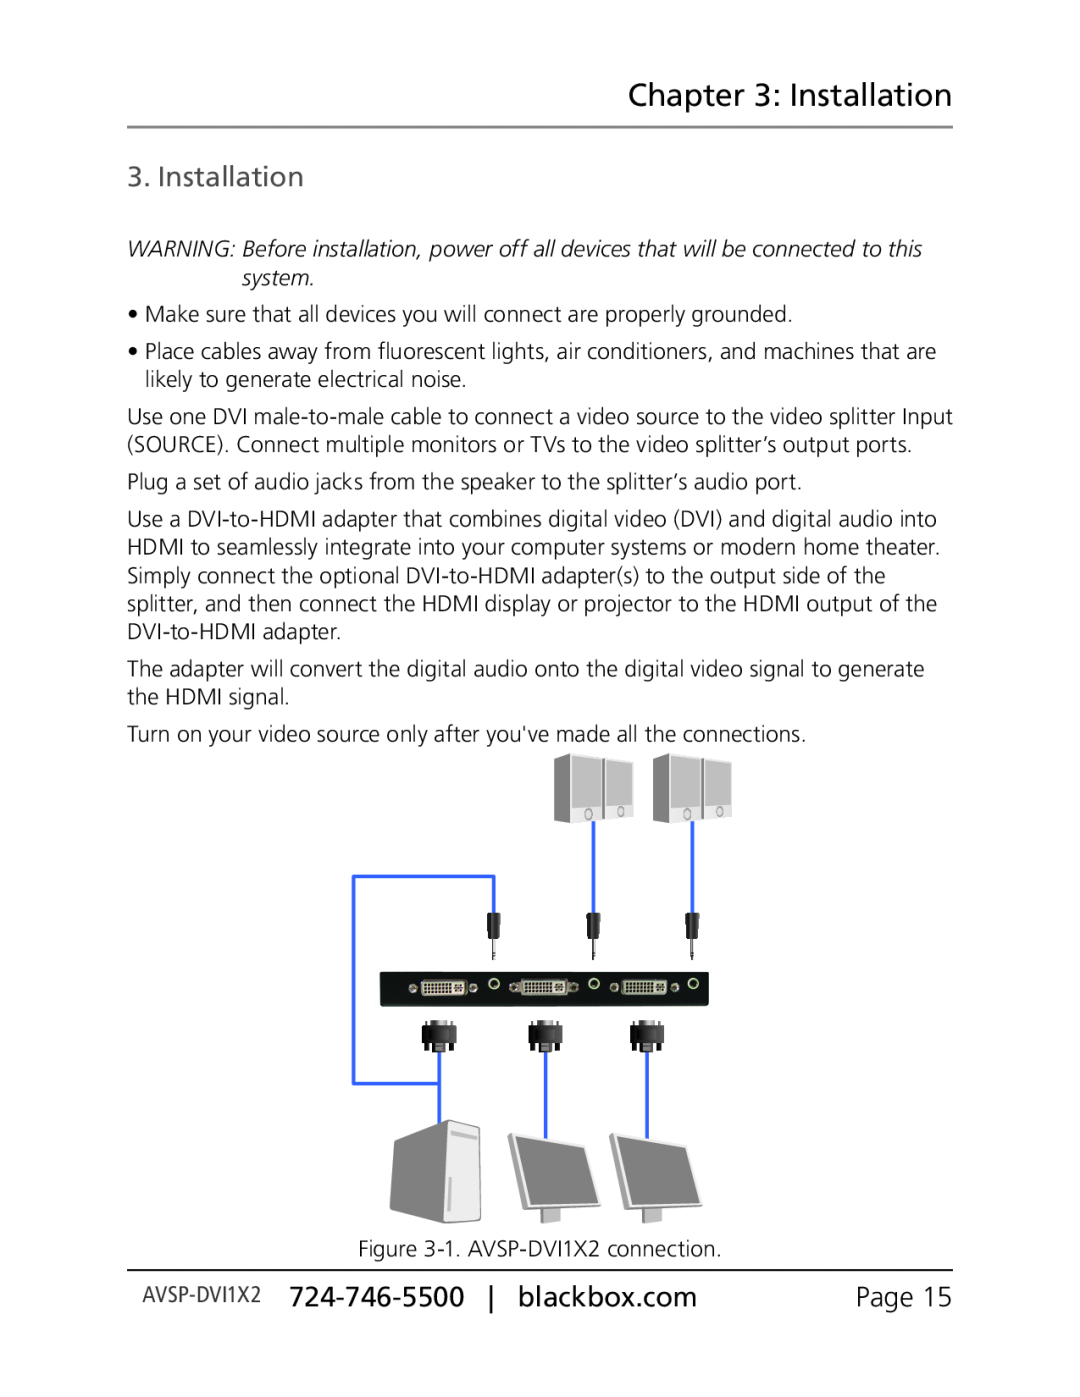 Black Box AVSP-DVI1X8, Black Box, AVSP-DVI1X4 manual Installation, AVSP-DVI1X2 724-746-5500| blackbox.com, Page 